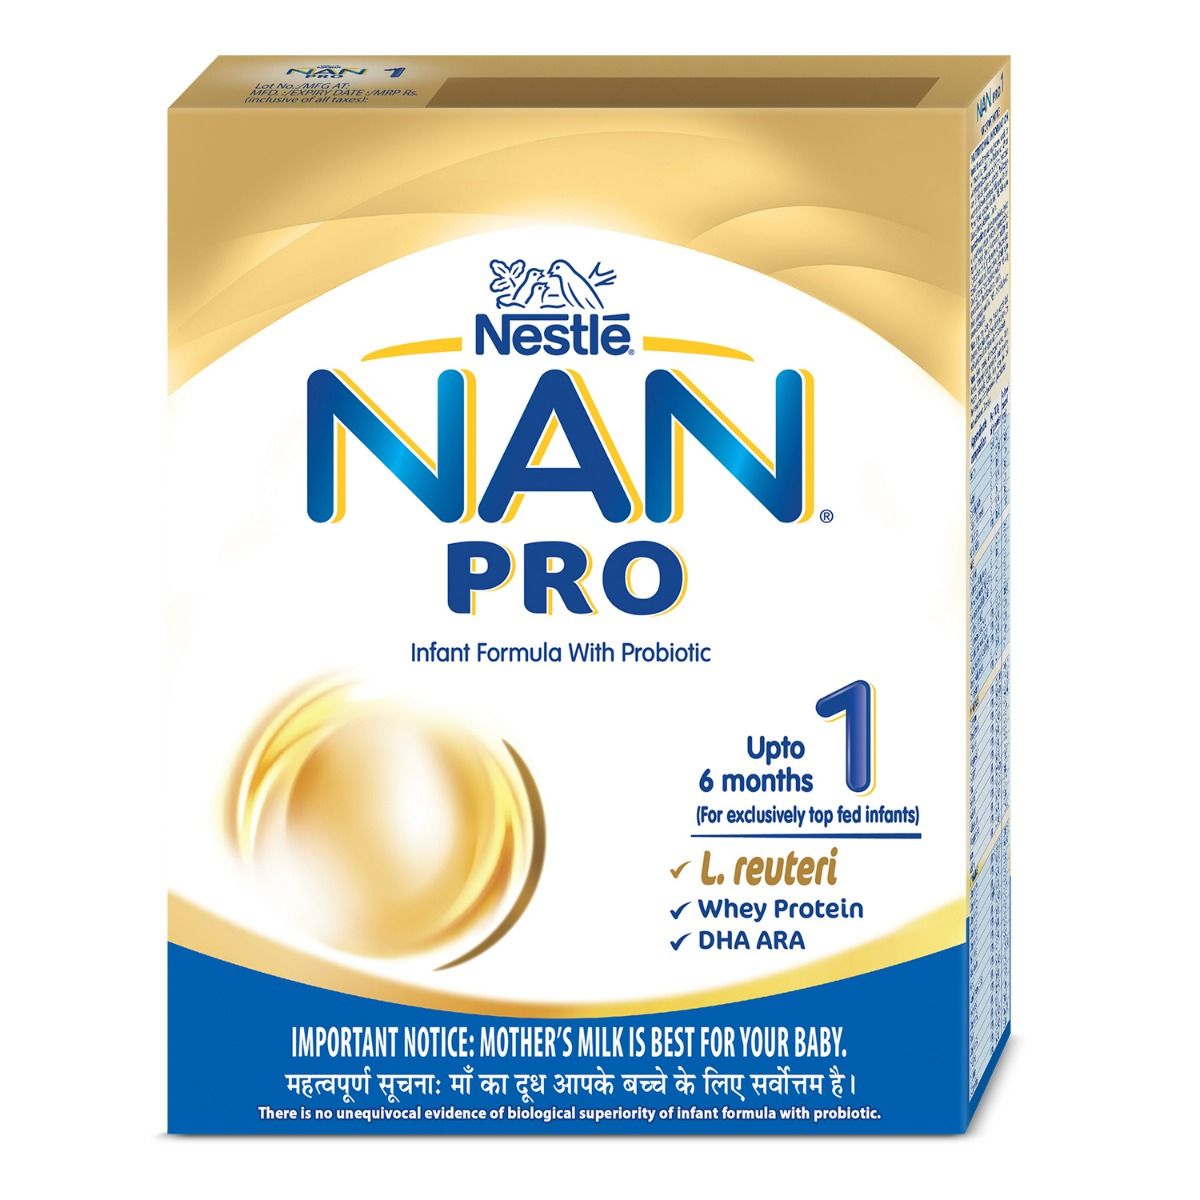 Nestle Nan Pro Infant Formula Powder, Stage 1, Upto 6 months, 400 gm Refill Pack, Pack of 1 